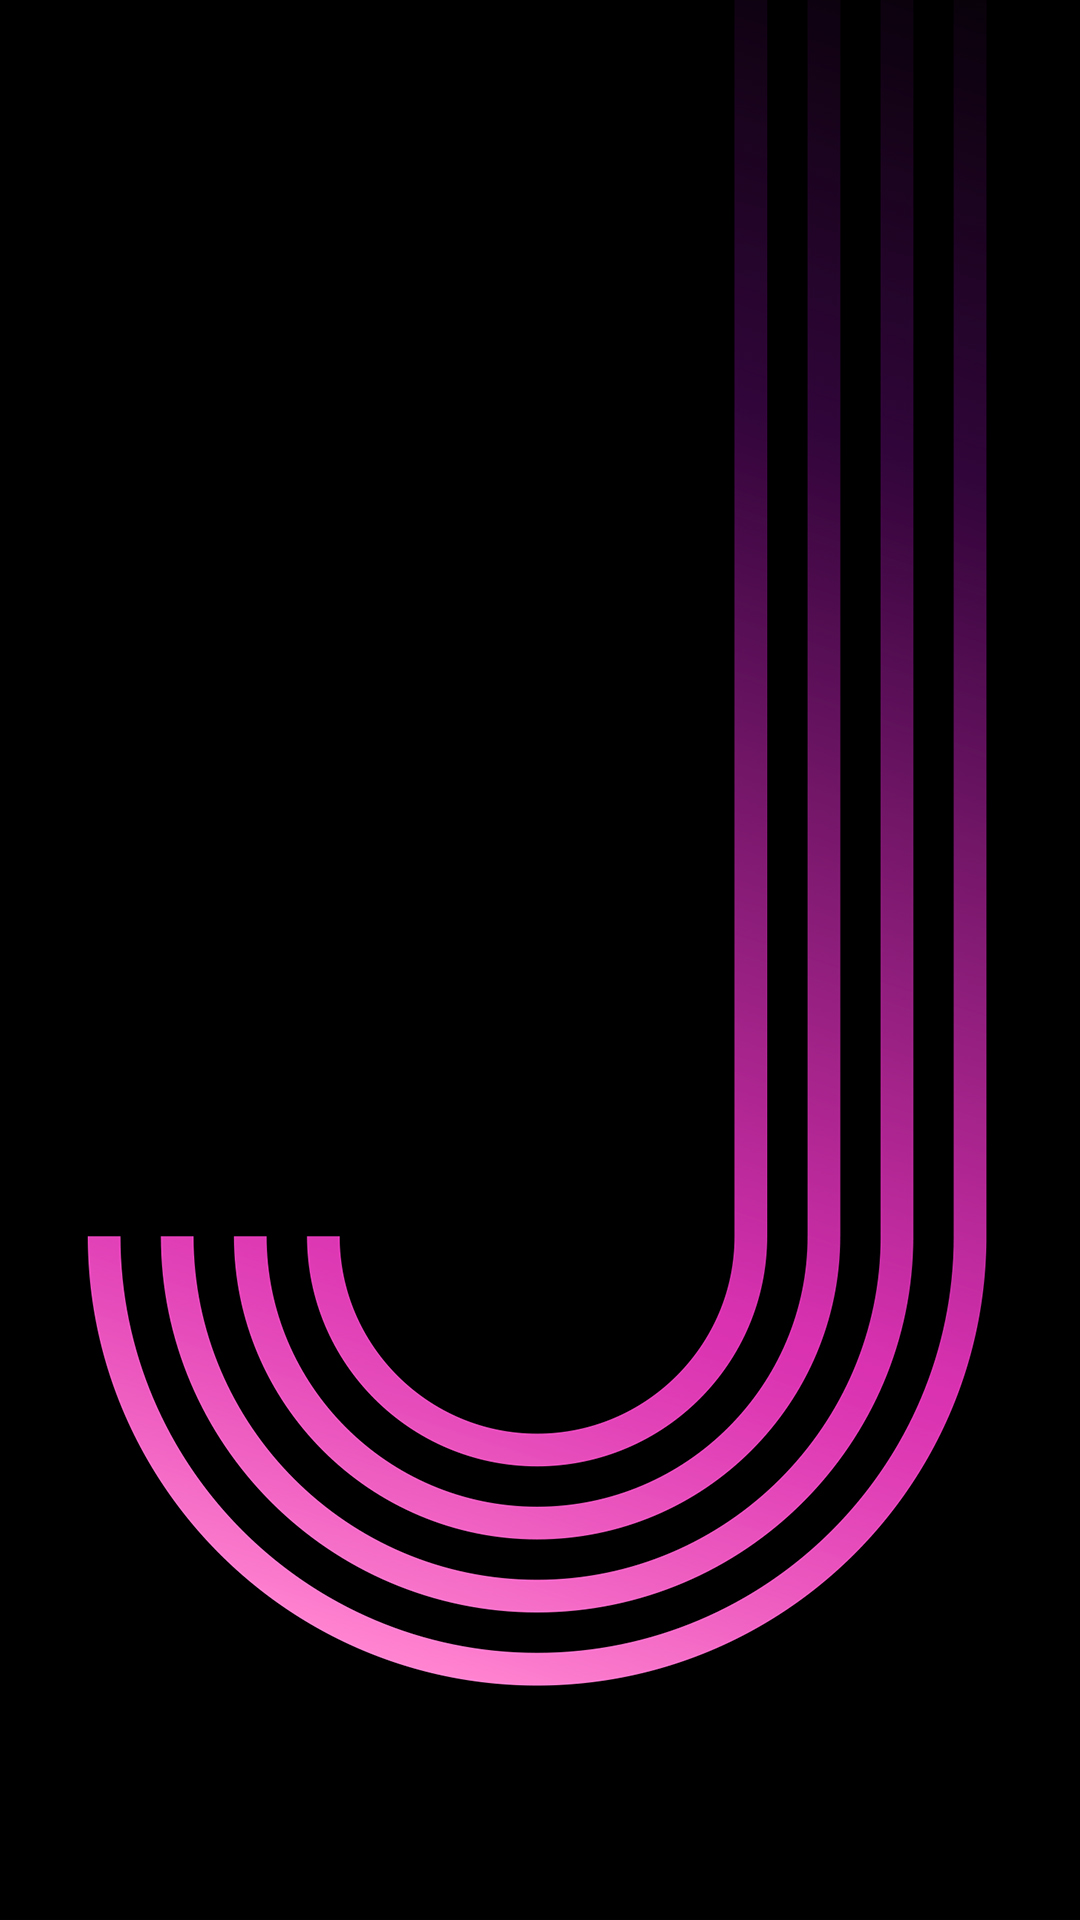 samsung galaxy j5 wallpaper,violett,lila,schwarz,text,rosa